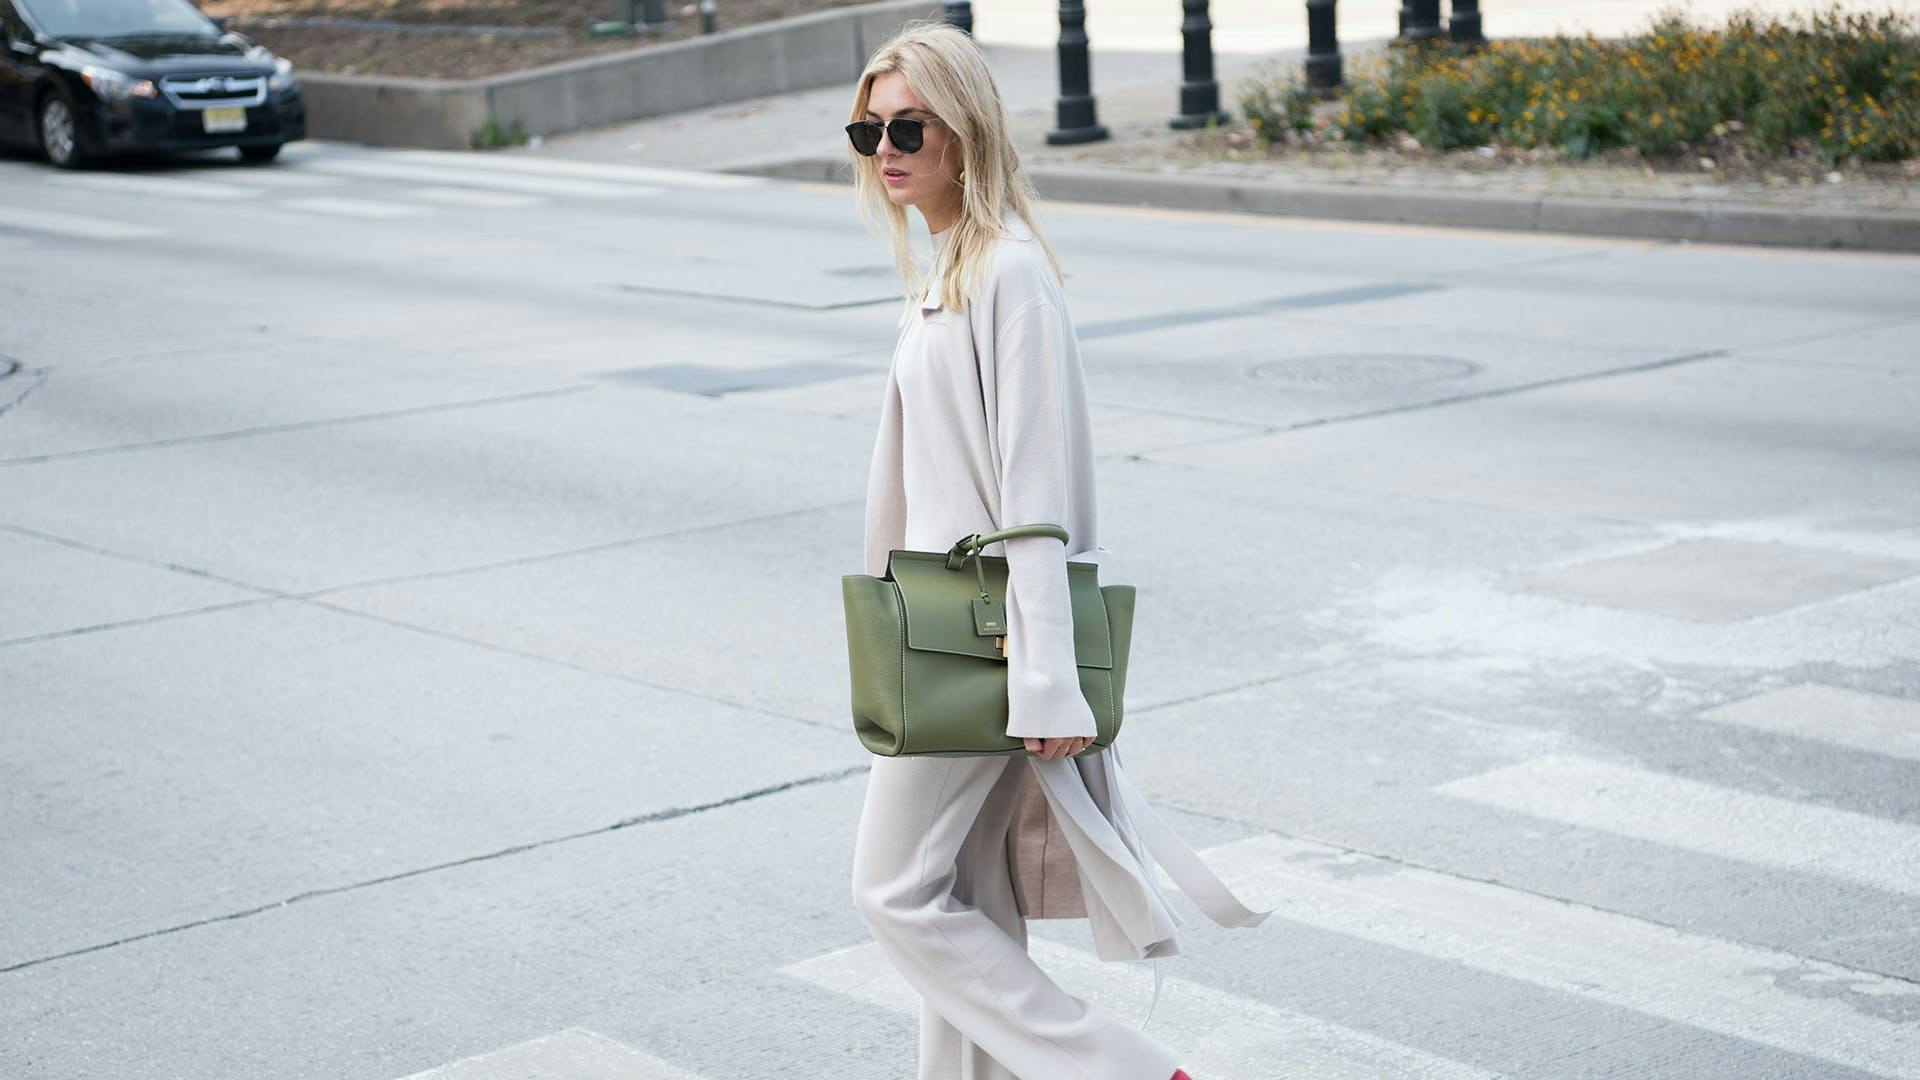 car road sunglasses accessories clothing tarmac sleeve person handbag bag